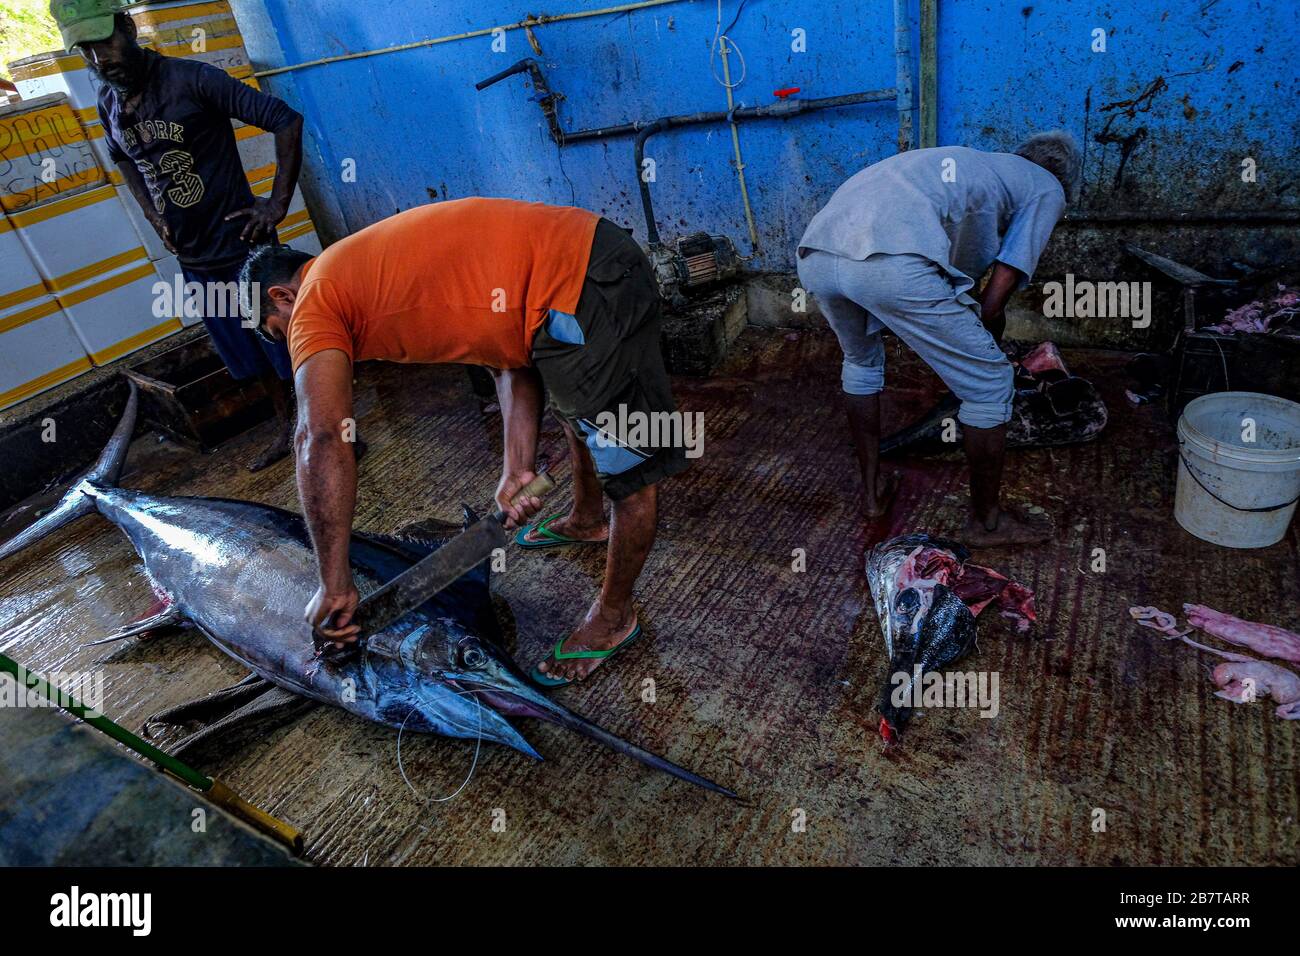 Trincomalee, Sri Lanka - February 2020: Men cutting a swordfish at the Trincomalee market on February 16, 2020 in Trincomalee, Sri Lanka. Stock Photo